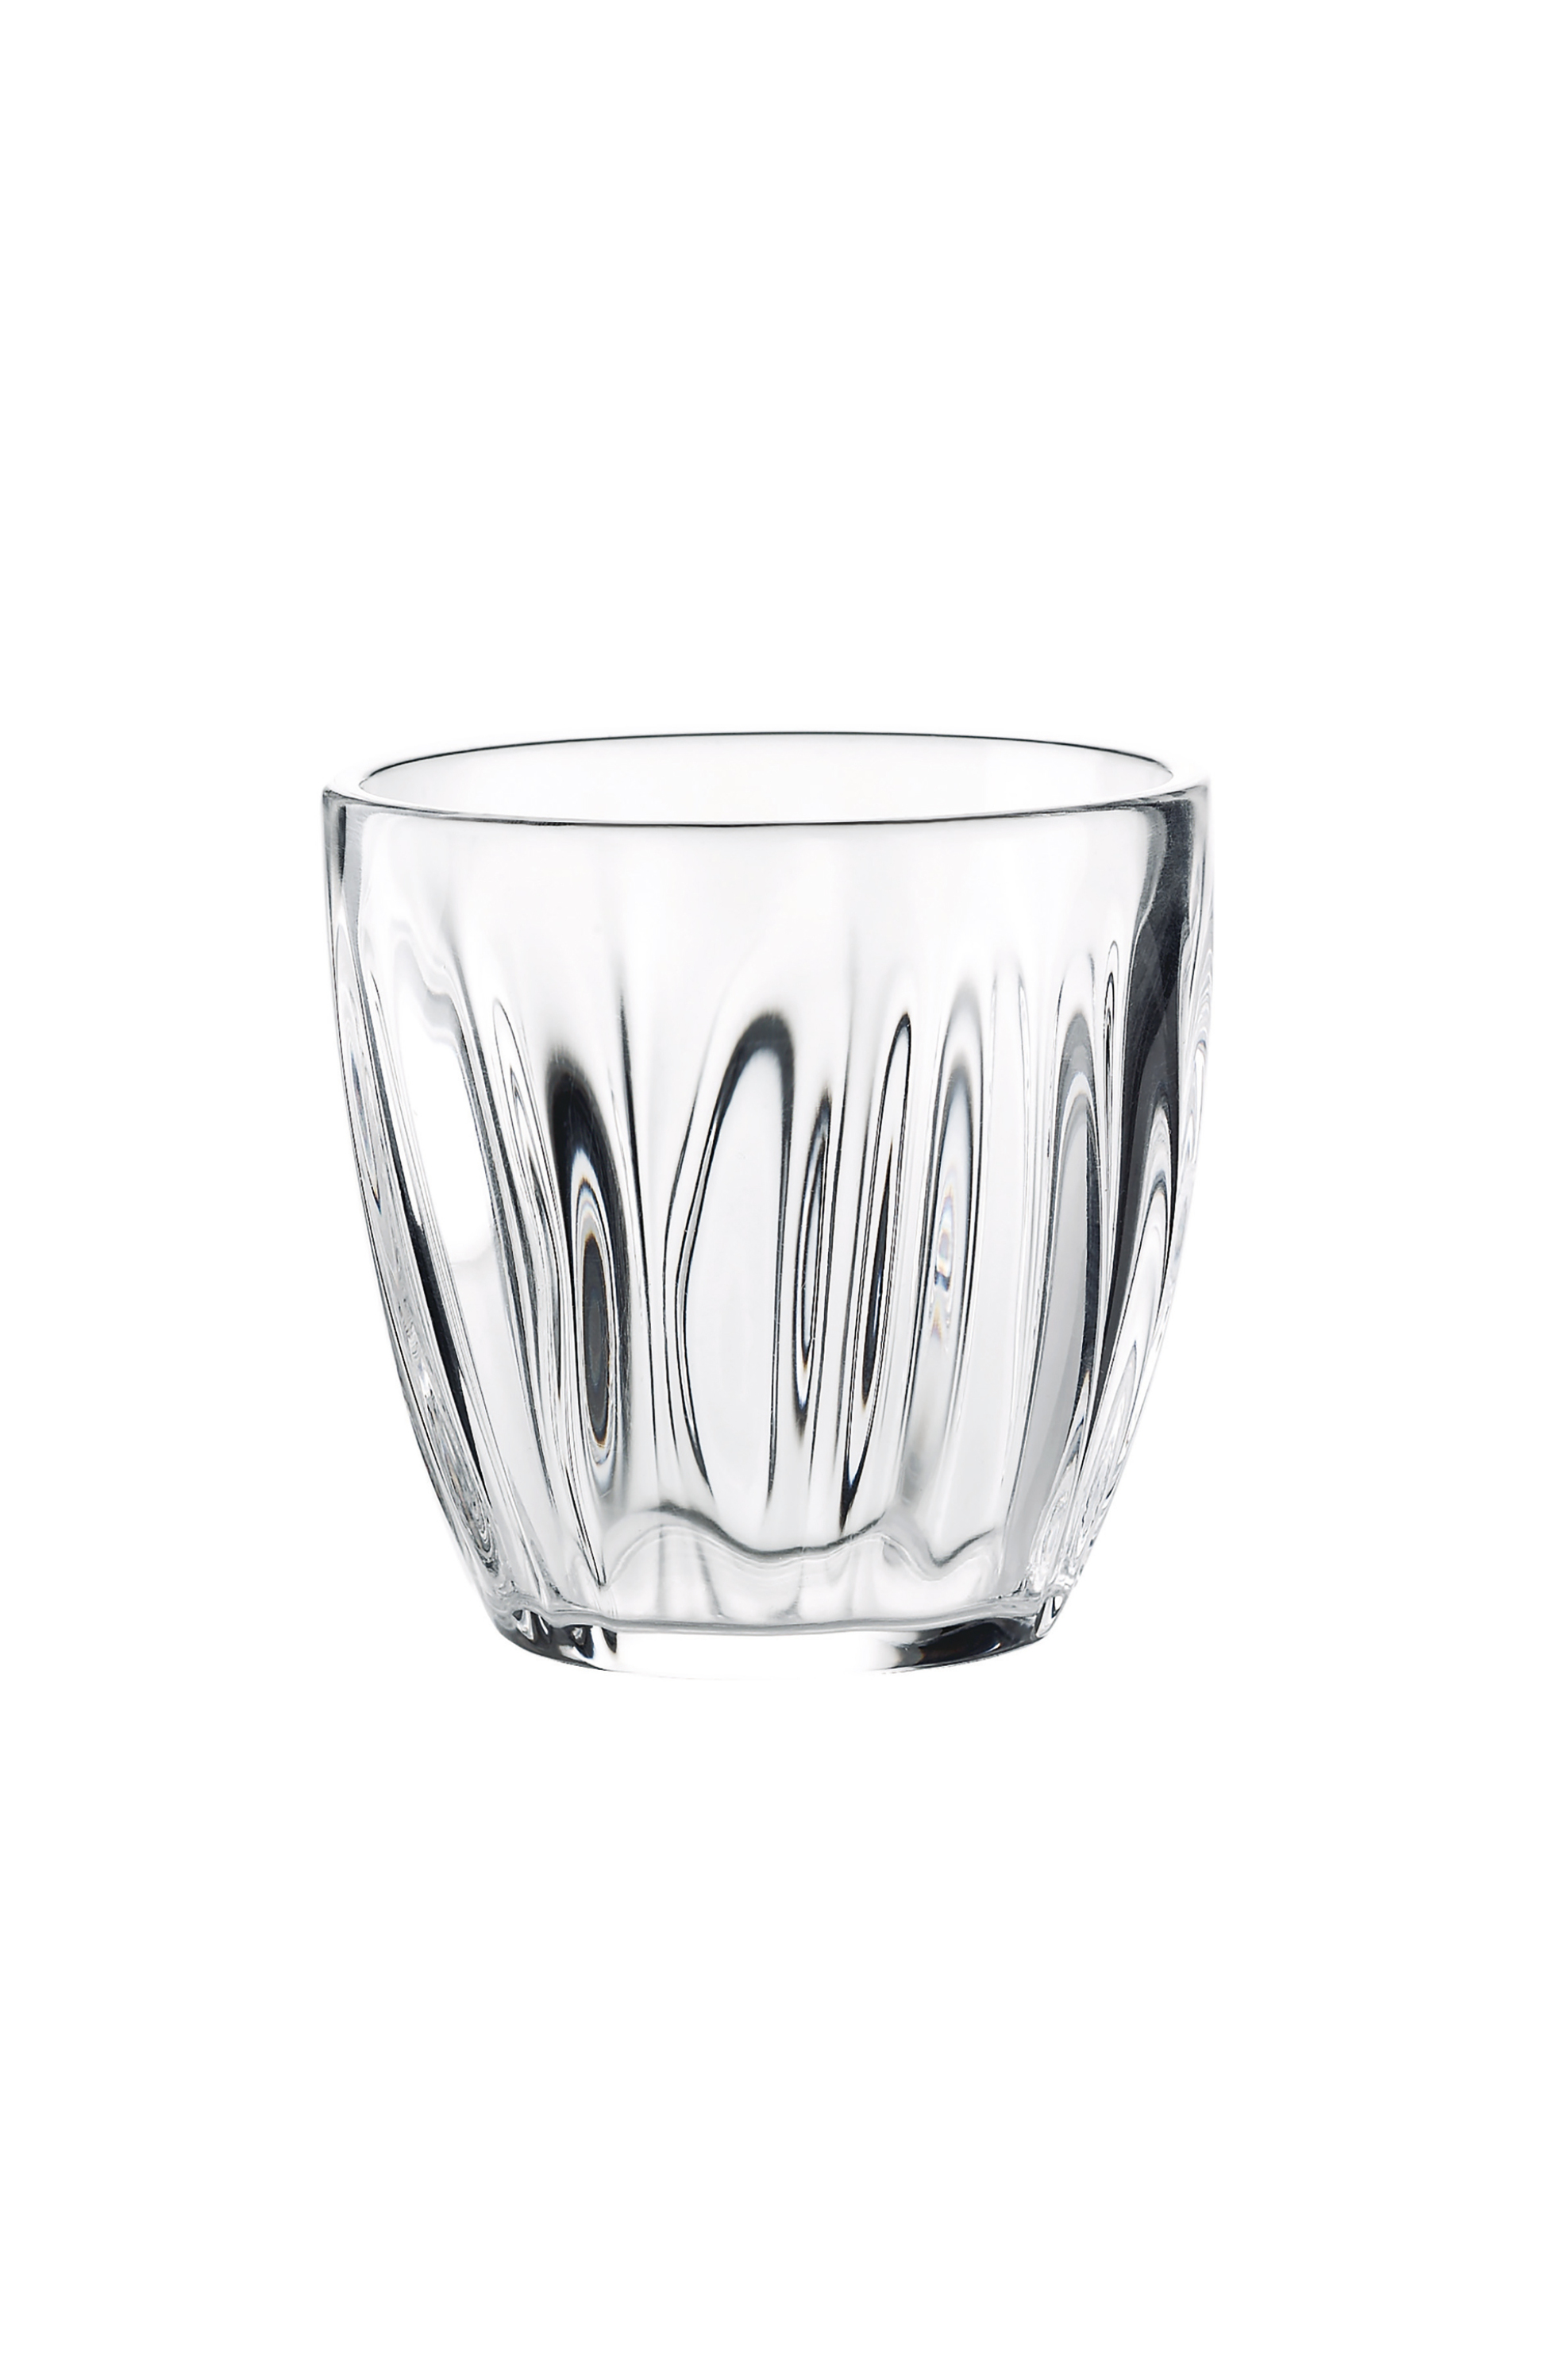 Home > ΚΟΥΖΙΝΑ > Είδη Σερβιρίσματος Guzzini ποτήρι νερού με ανάγλυφο σχέδιο "Aqua" 9 x 9 cm - 8008392193418